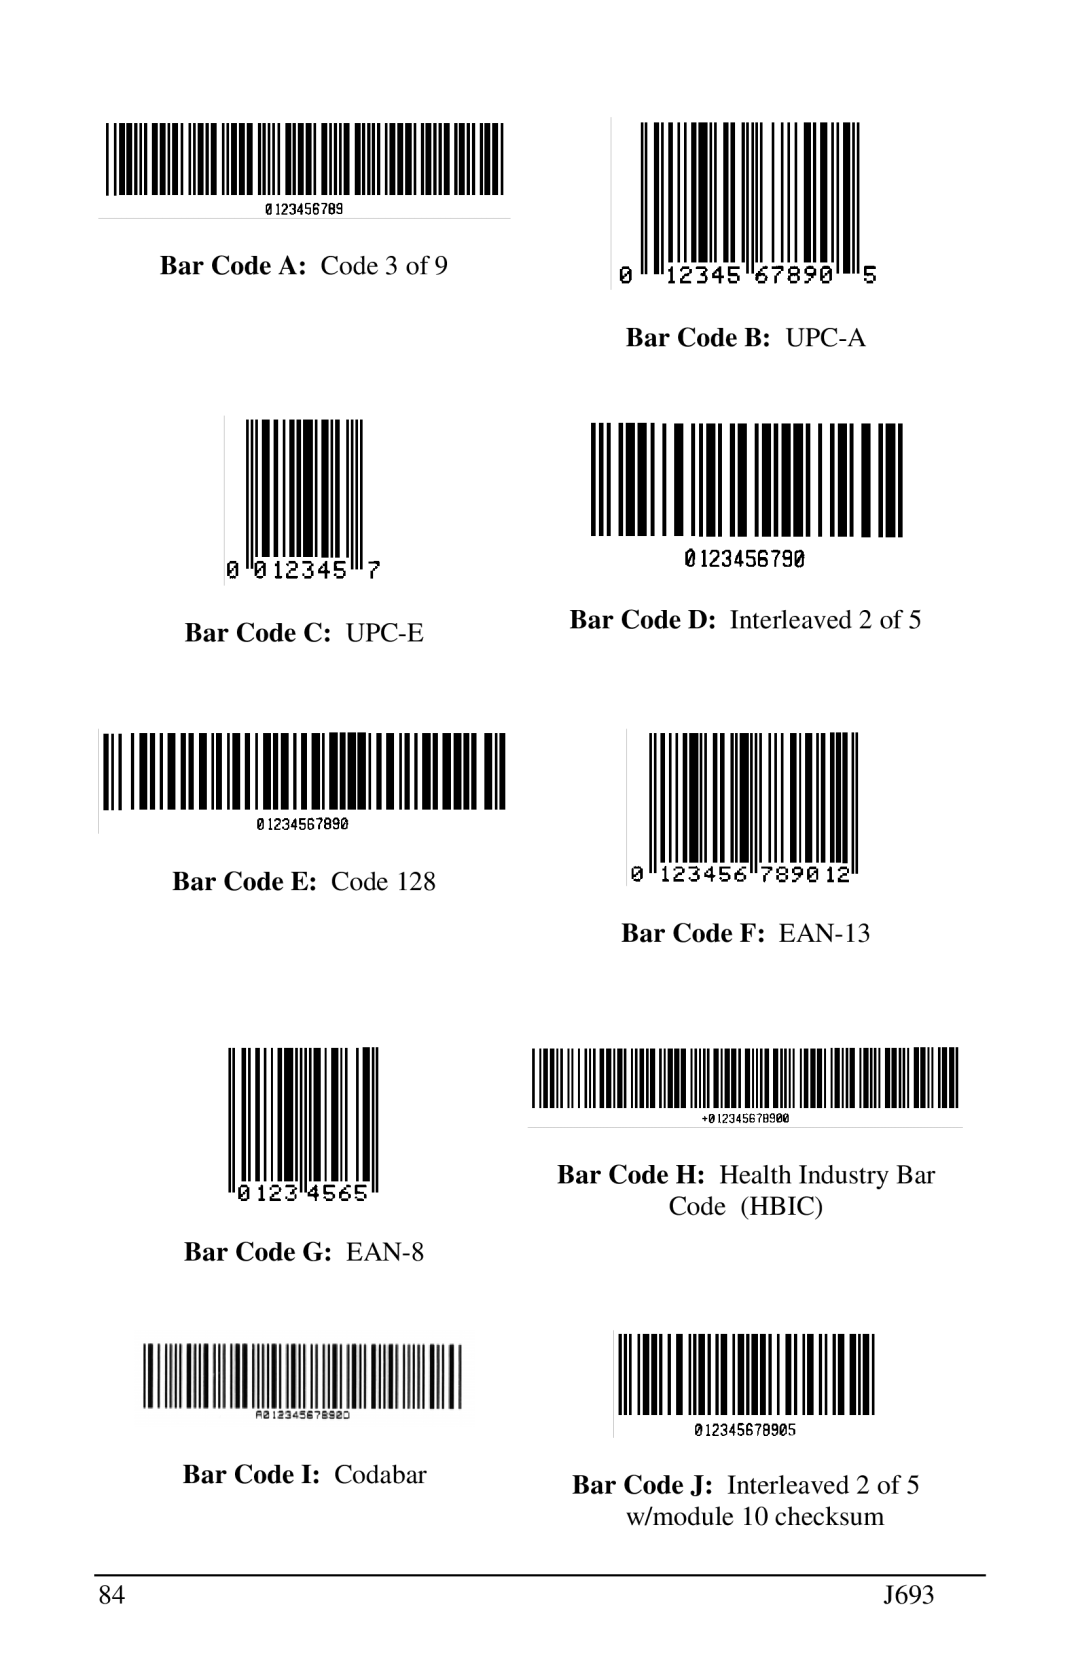 Pitney Bowes J693 manual Bar Code A Code 3 of Bar Code C UPC-E Bar Code E Code, Bar Code G EAN-8 Bar Code I Codabar 